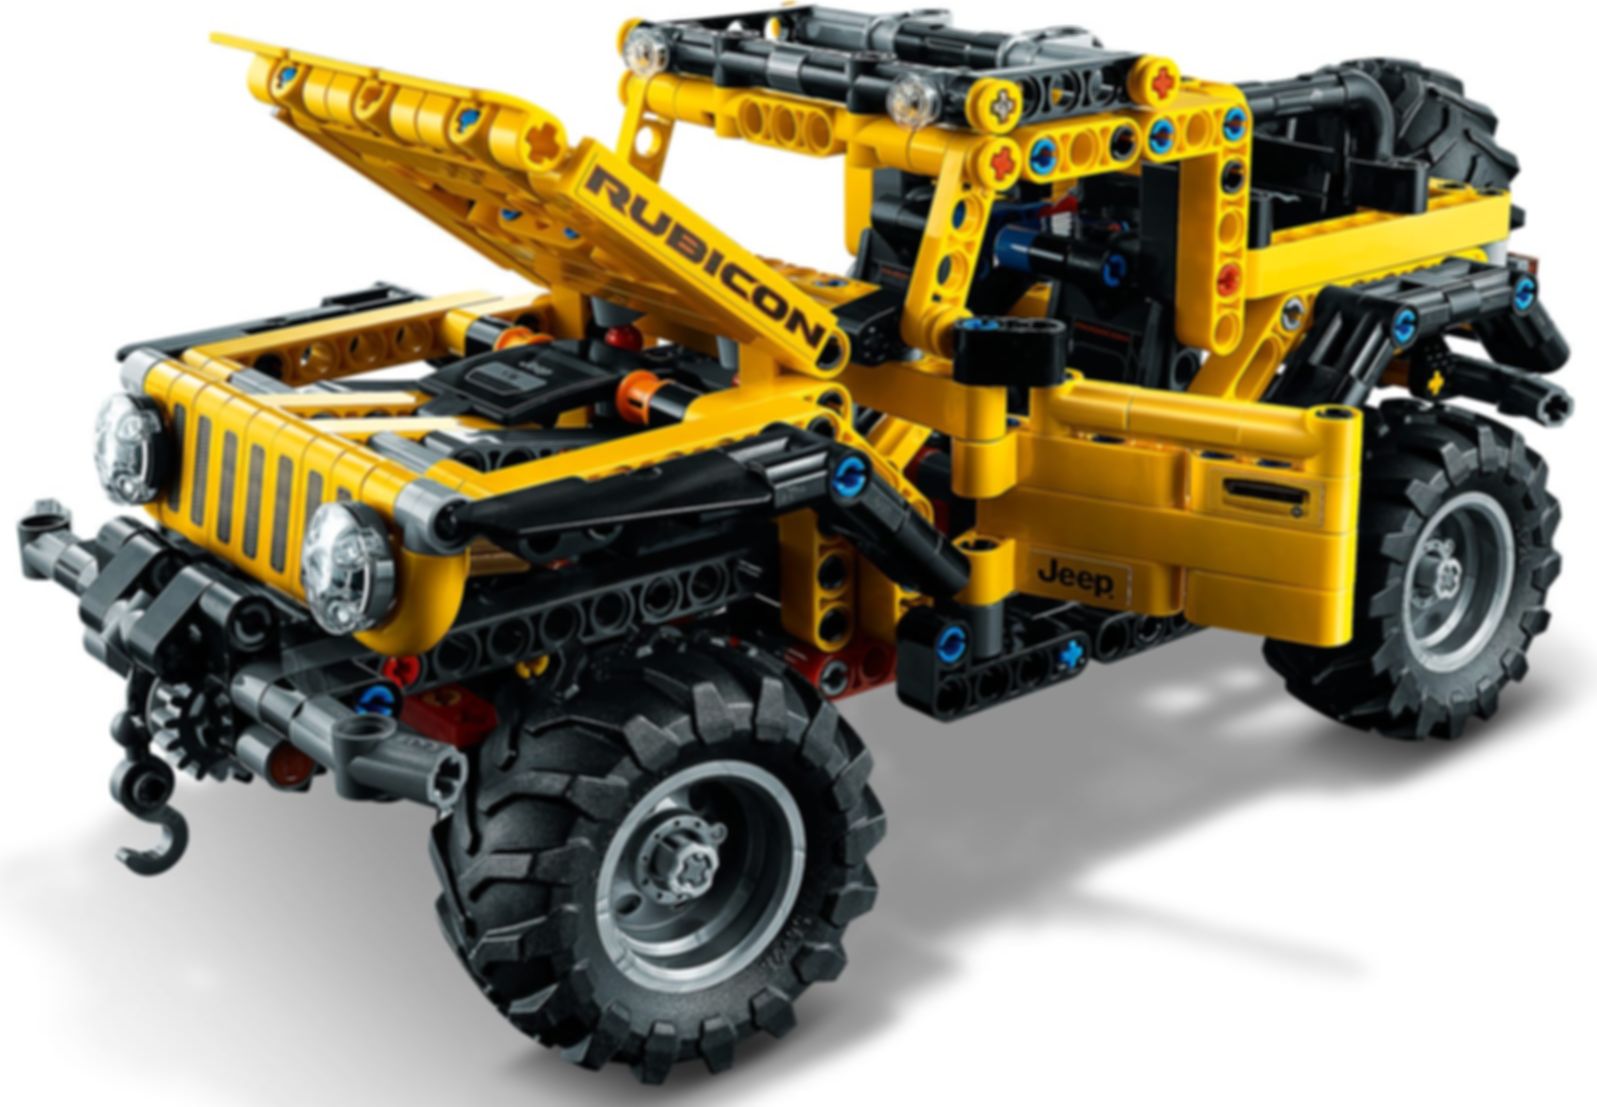 LEGO® Technic Jeep® Wrangler components